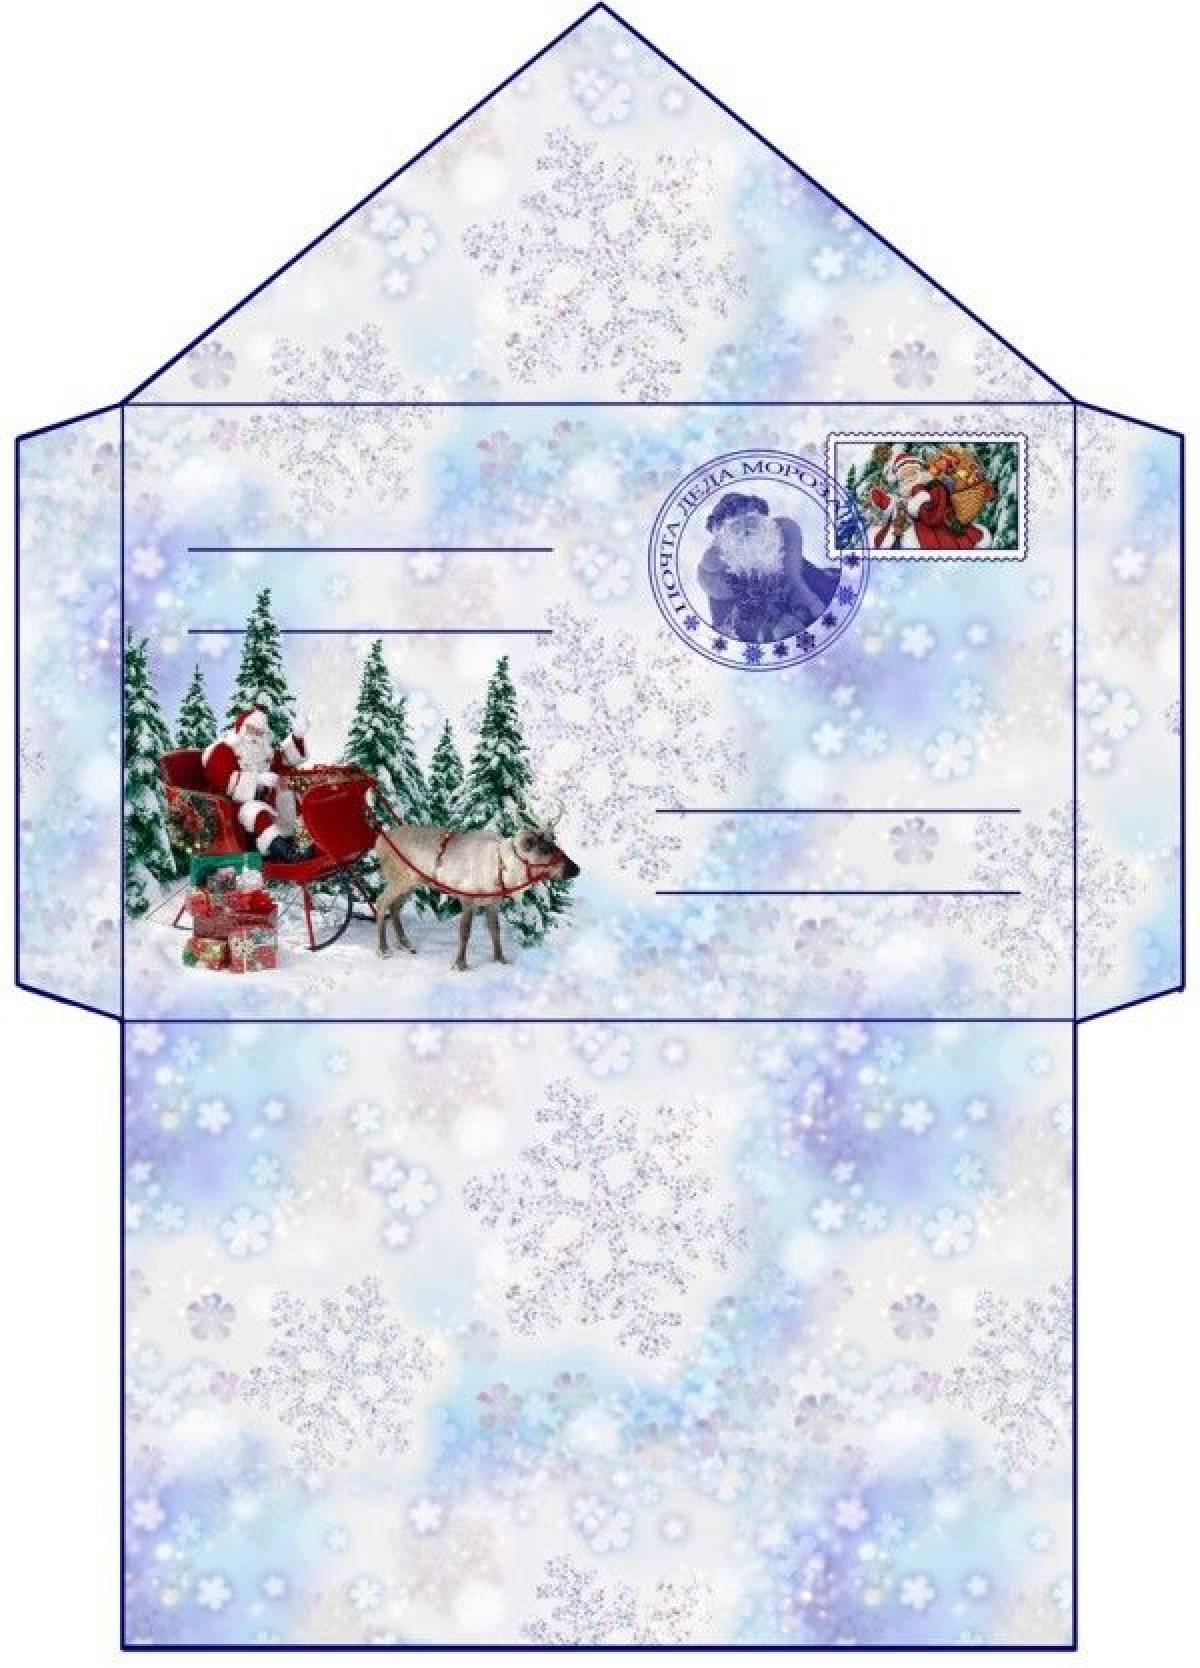 Envelope Santa Claus on a sled